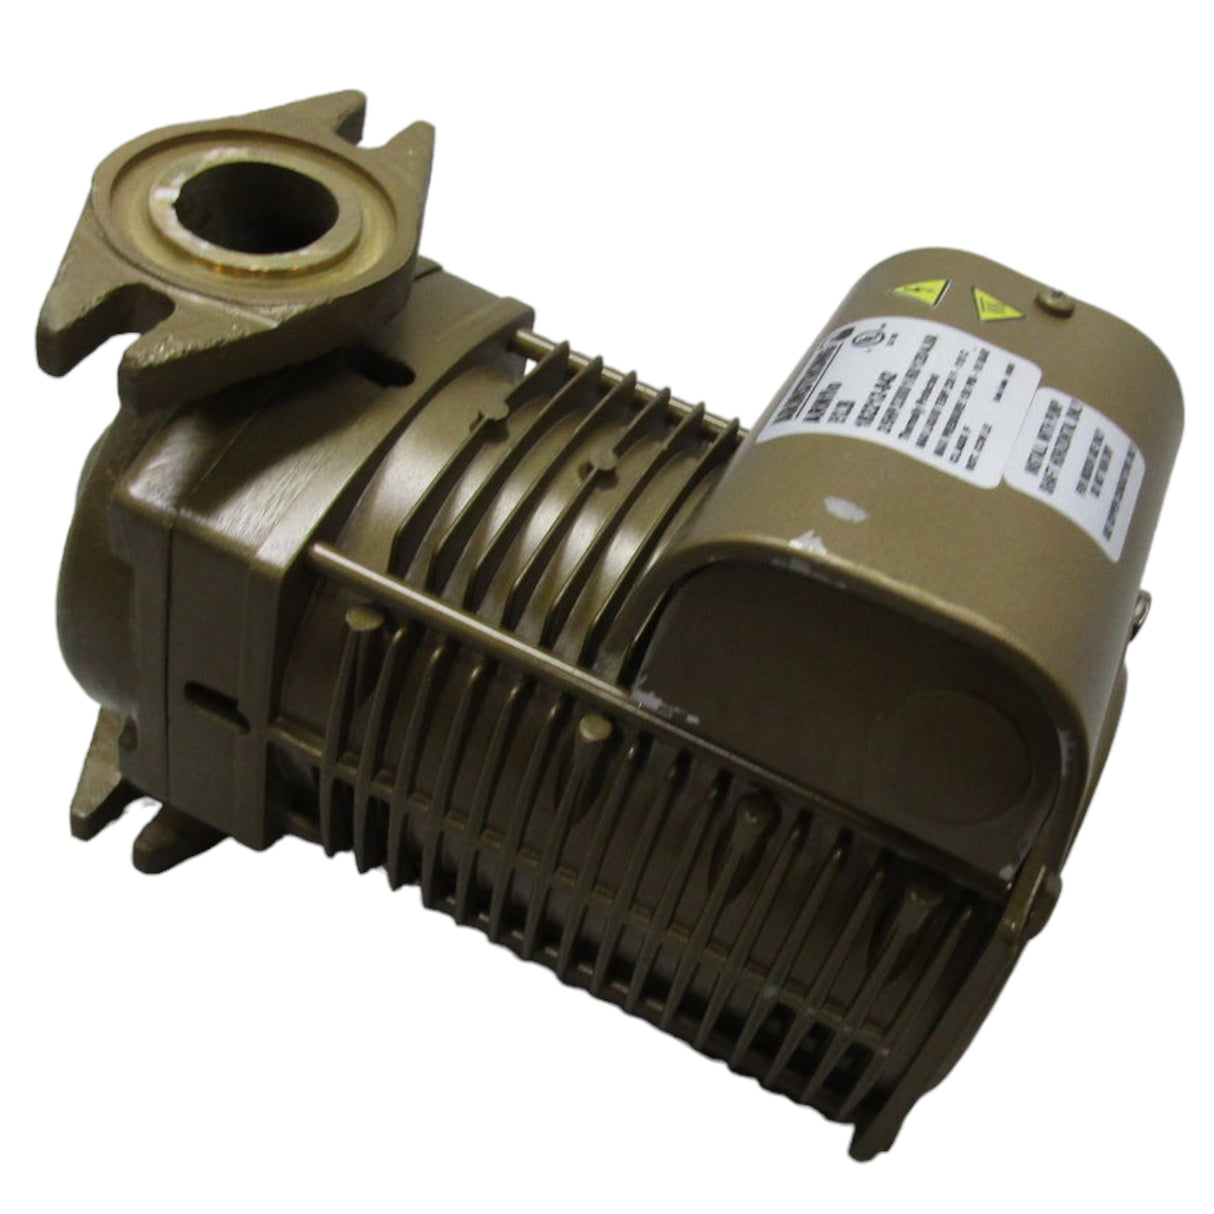 182212-842 Armstrong Bronze High-Efficiency Circulator Pump